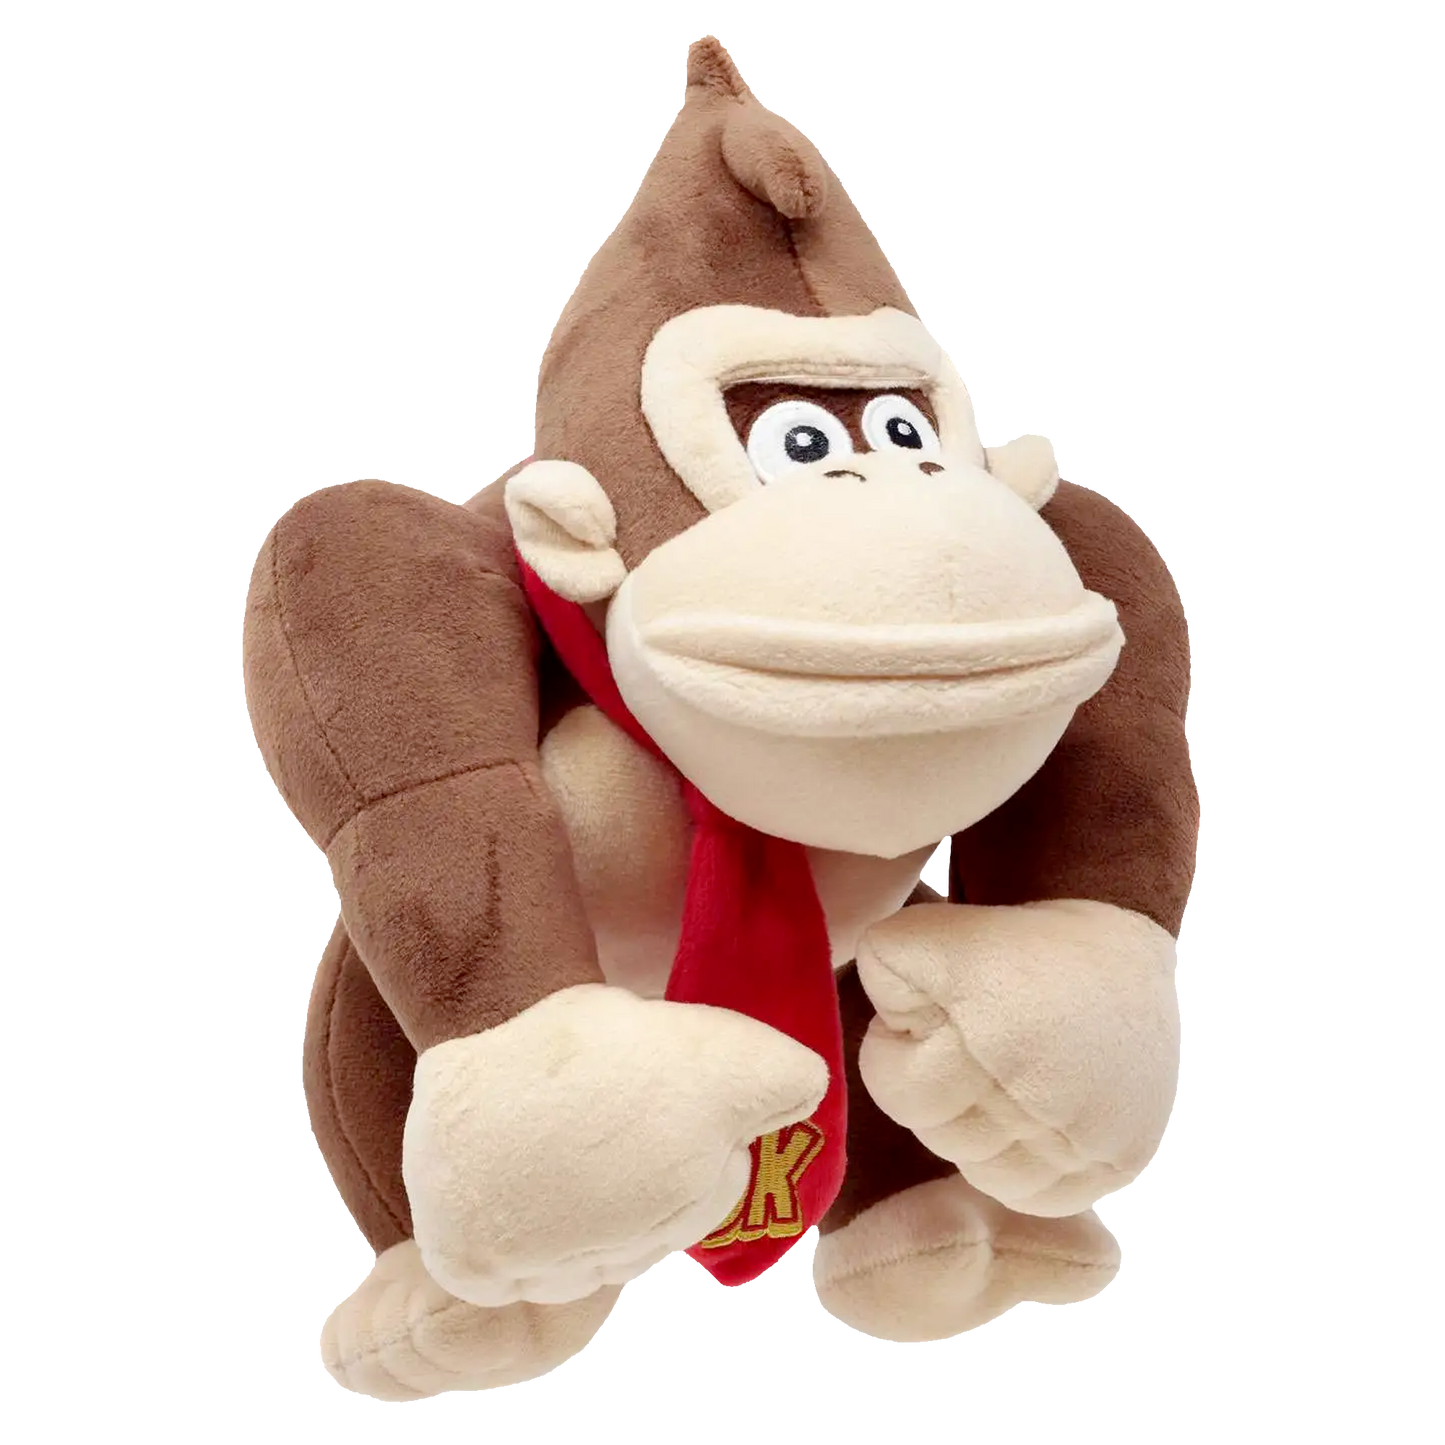 6” Donkey Kong Super Mario Bros Plush